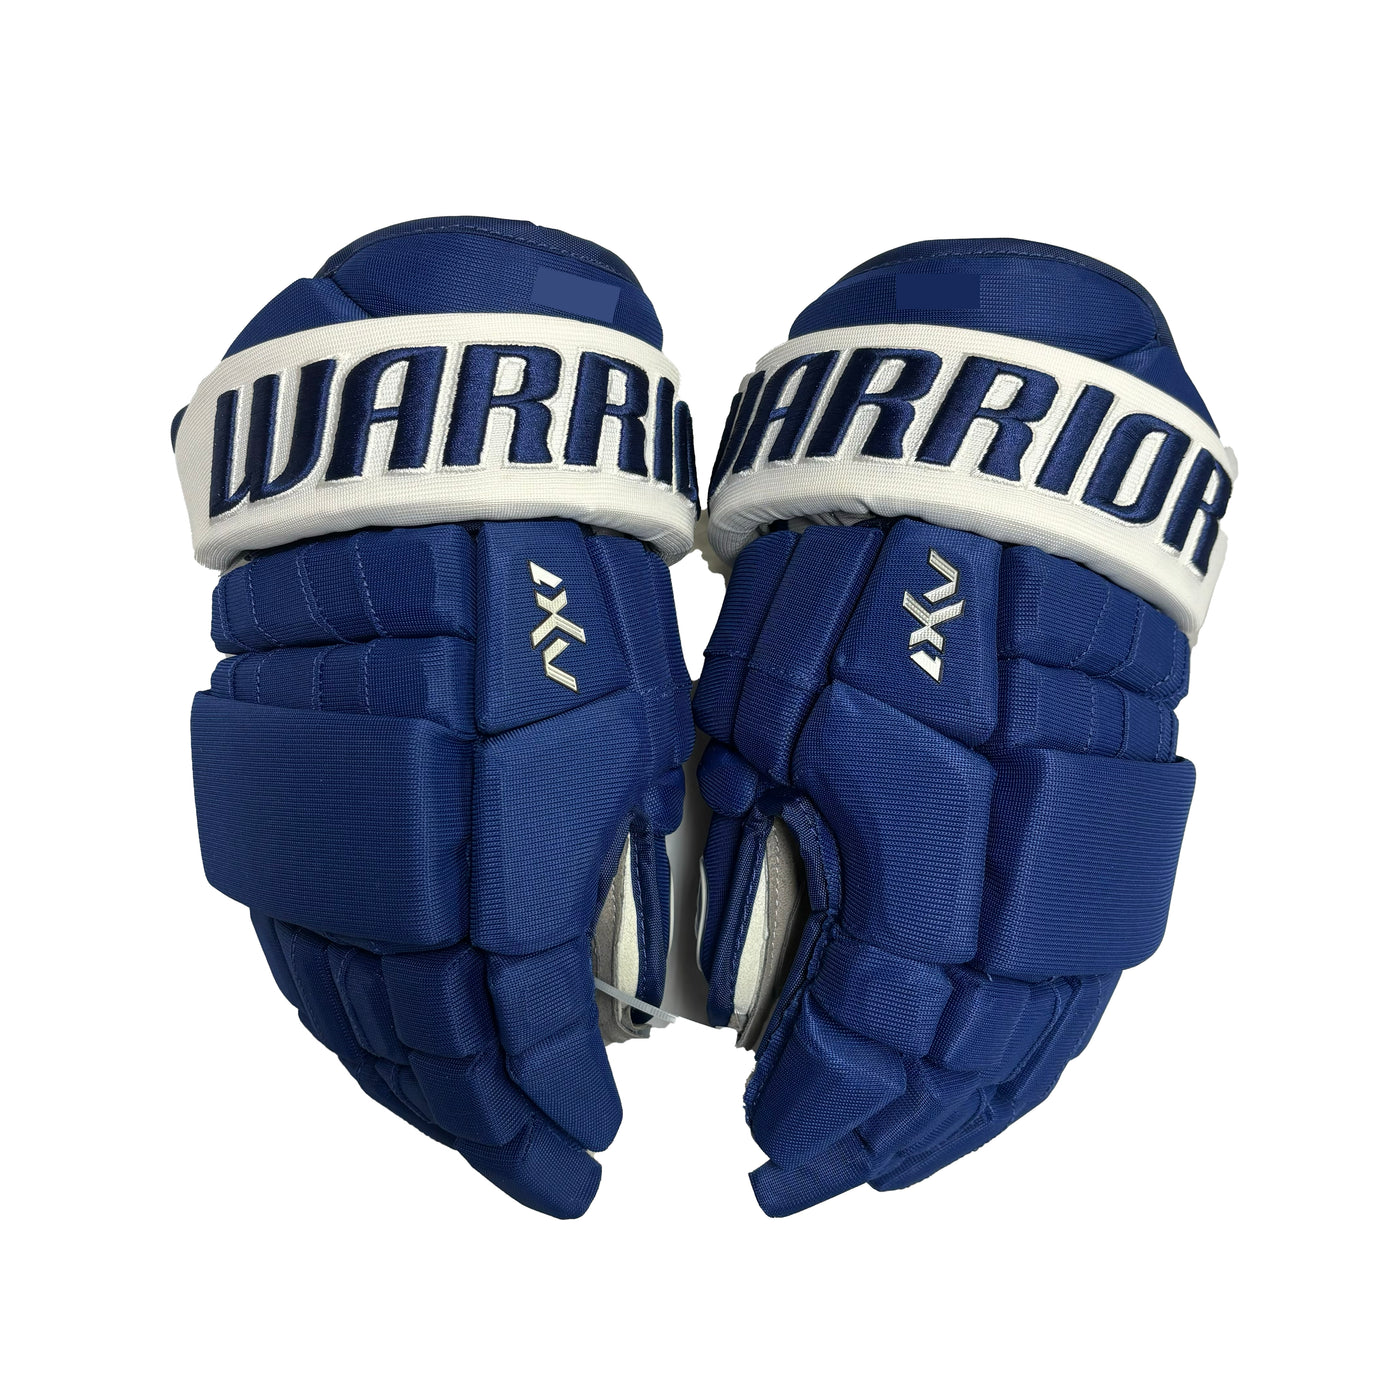 Warrior Franchise - Toronto Maple Leafs - Pro Stock Glove - MG2